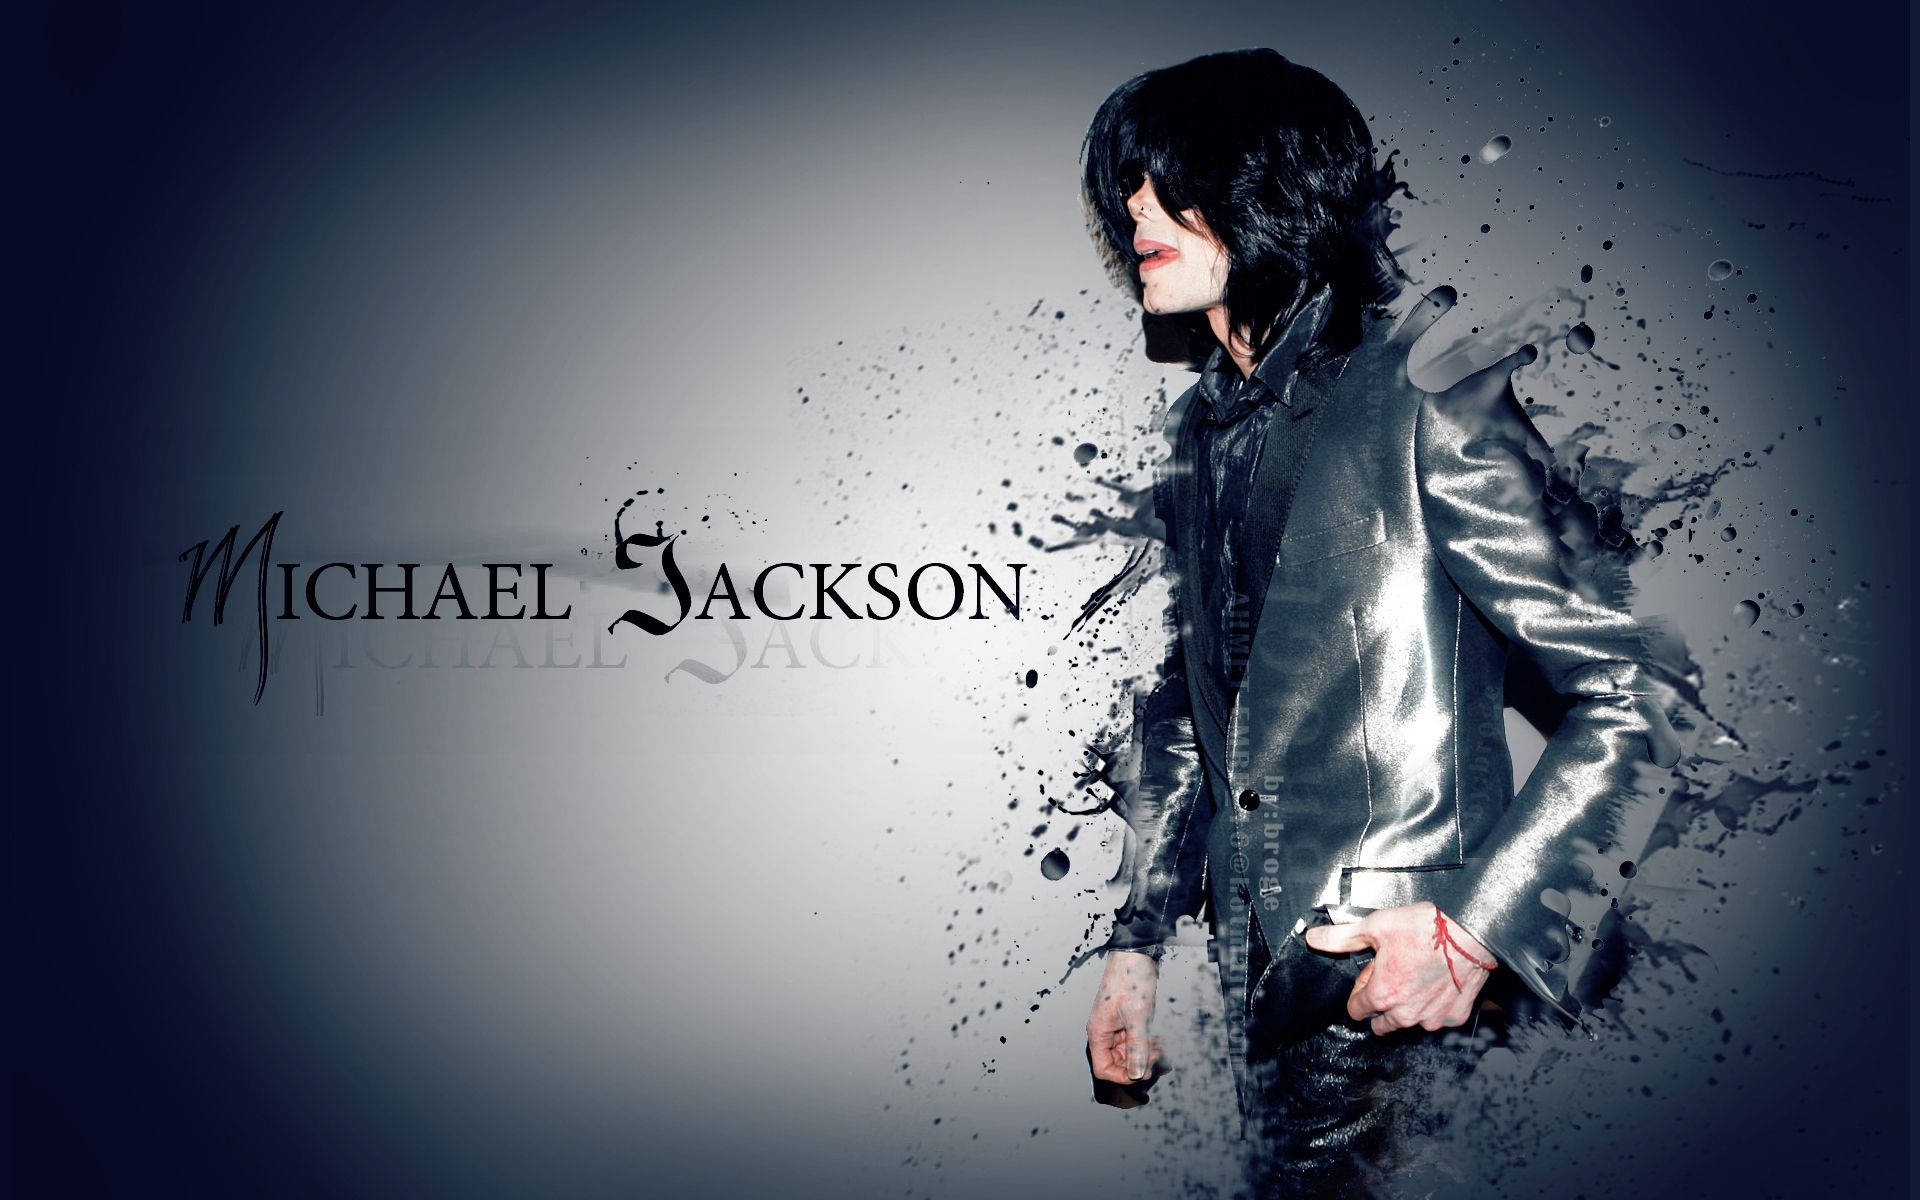 Michael Jackson: The King of Pop’s Enduring Legacy